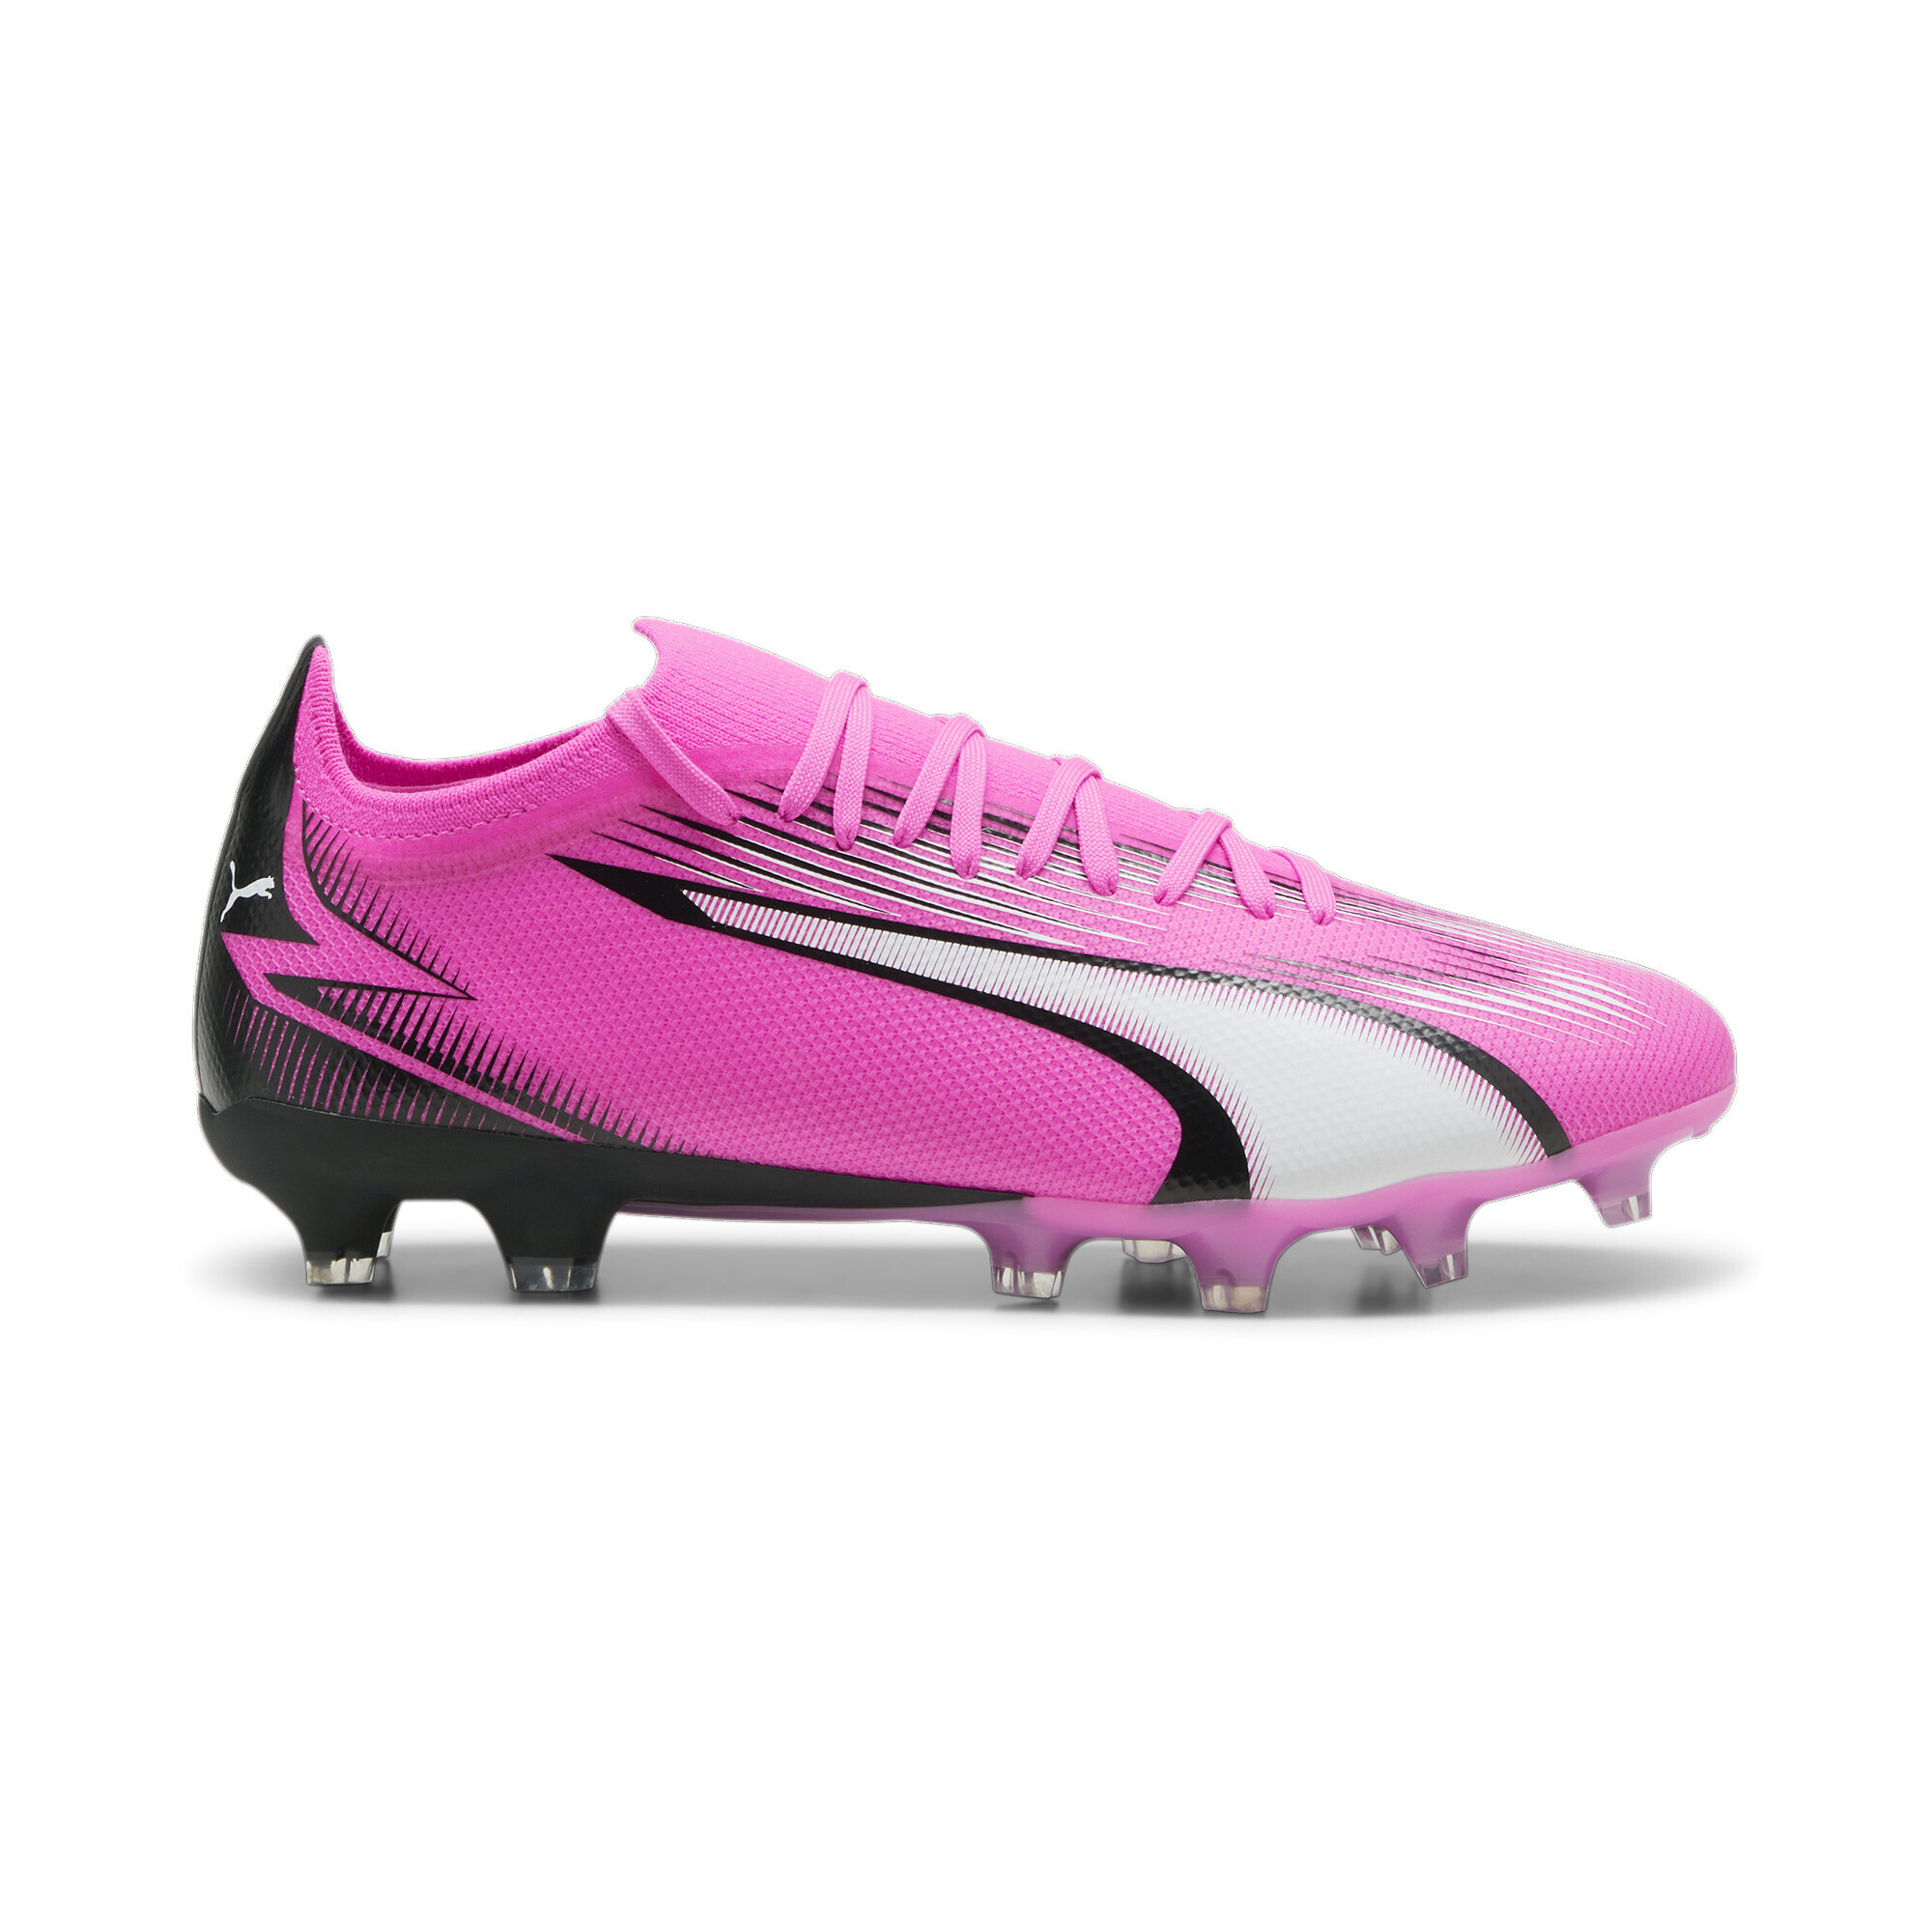 ULTRA MATCH FG/AG Football Boots | Football | PUMA